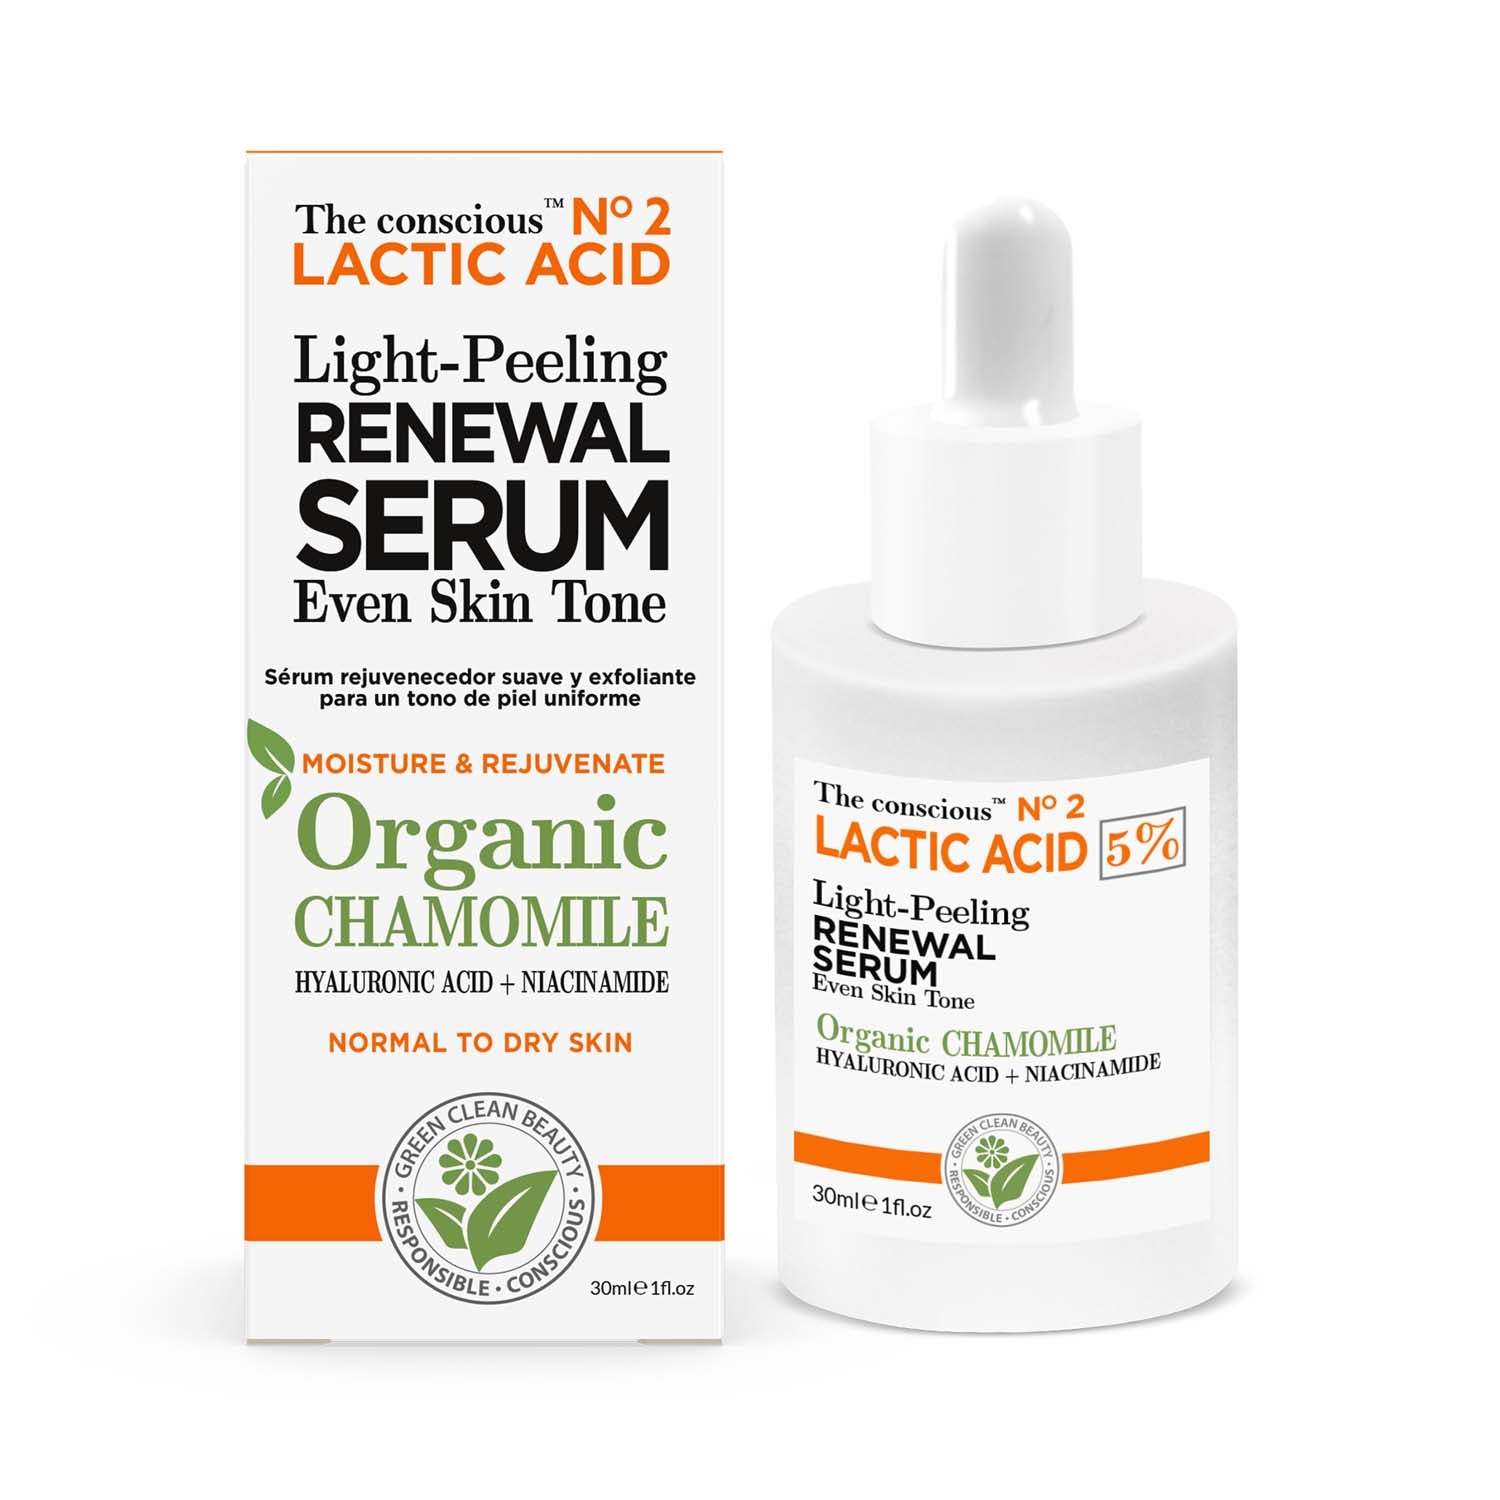 The conscious™ Lactic Acid Light Peeling Renewal Serum Organic Chamomile